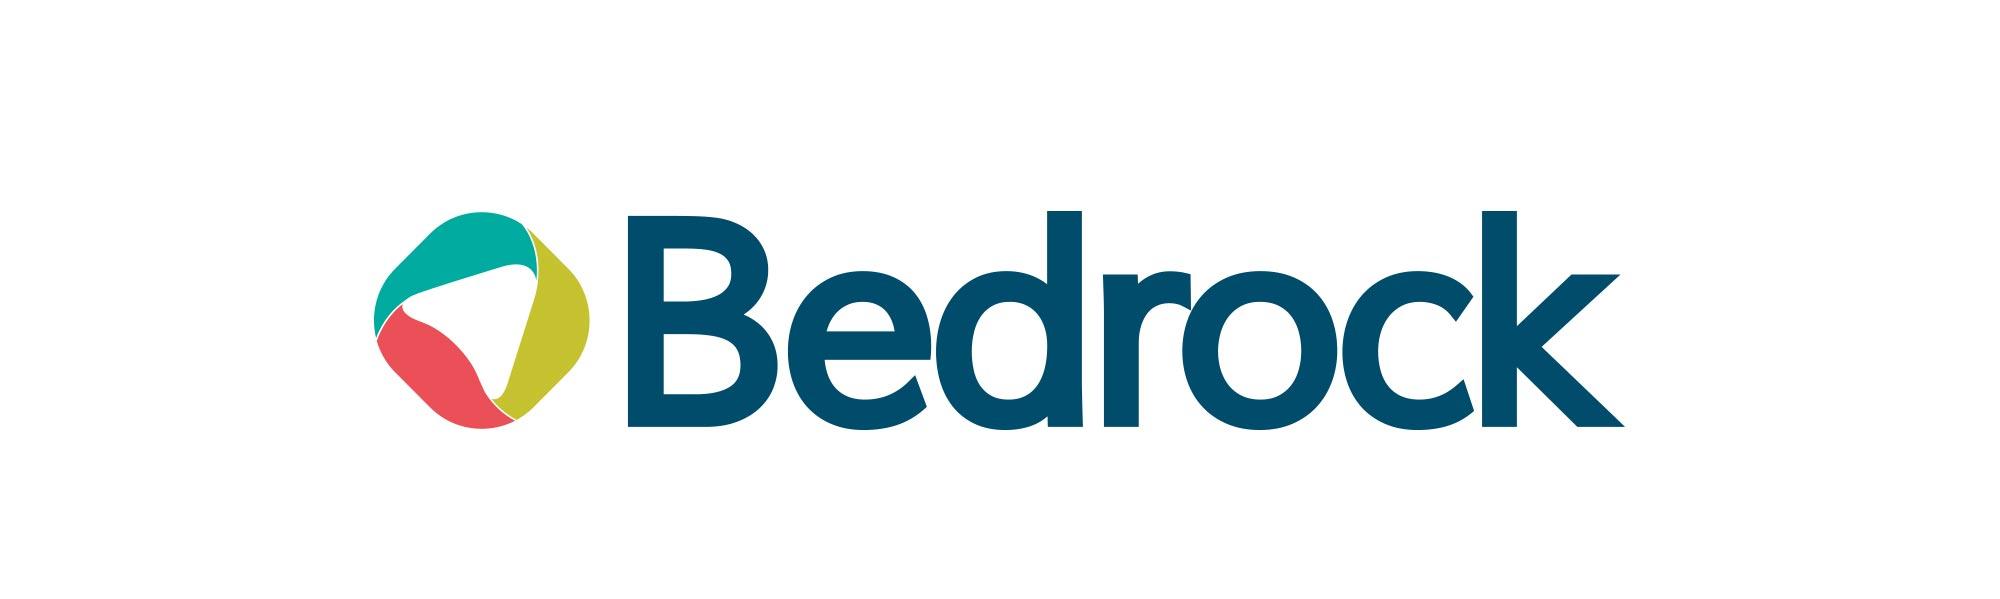 Bedrock Logo - Bedrock-Tax-Logo-Design - Threerooms Branding Agency